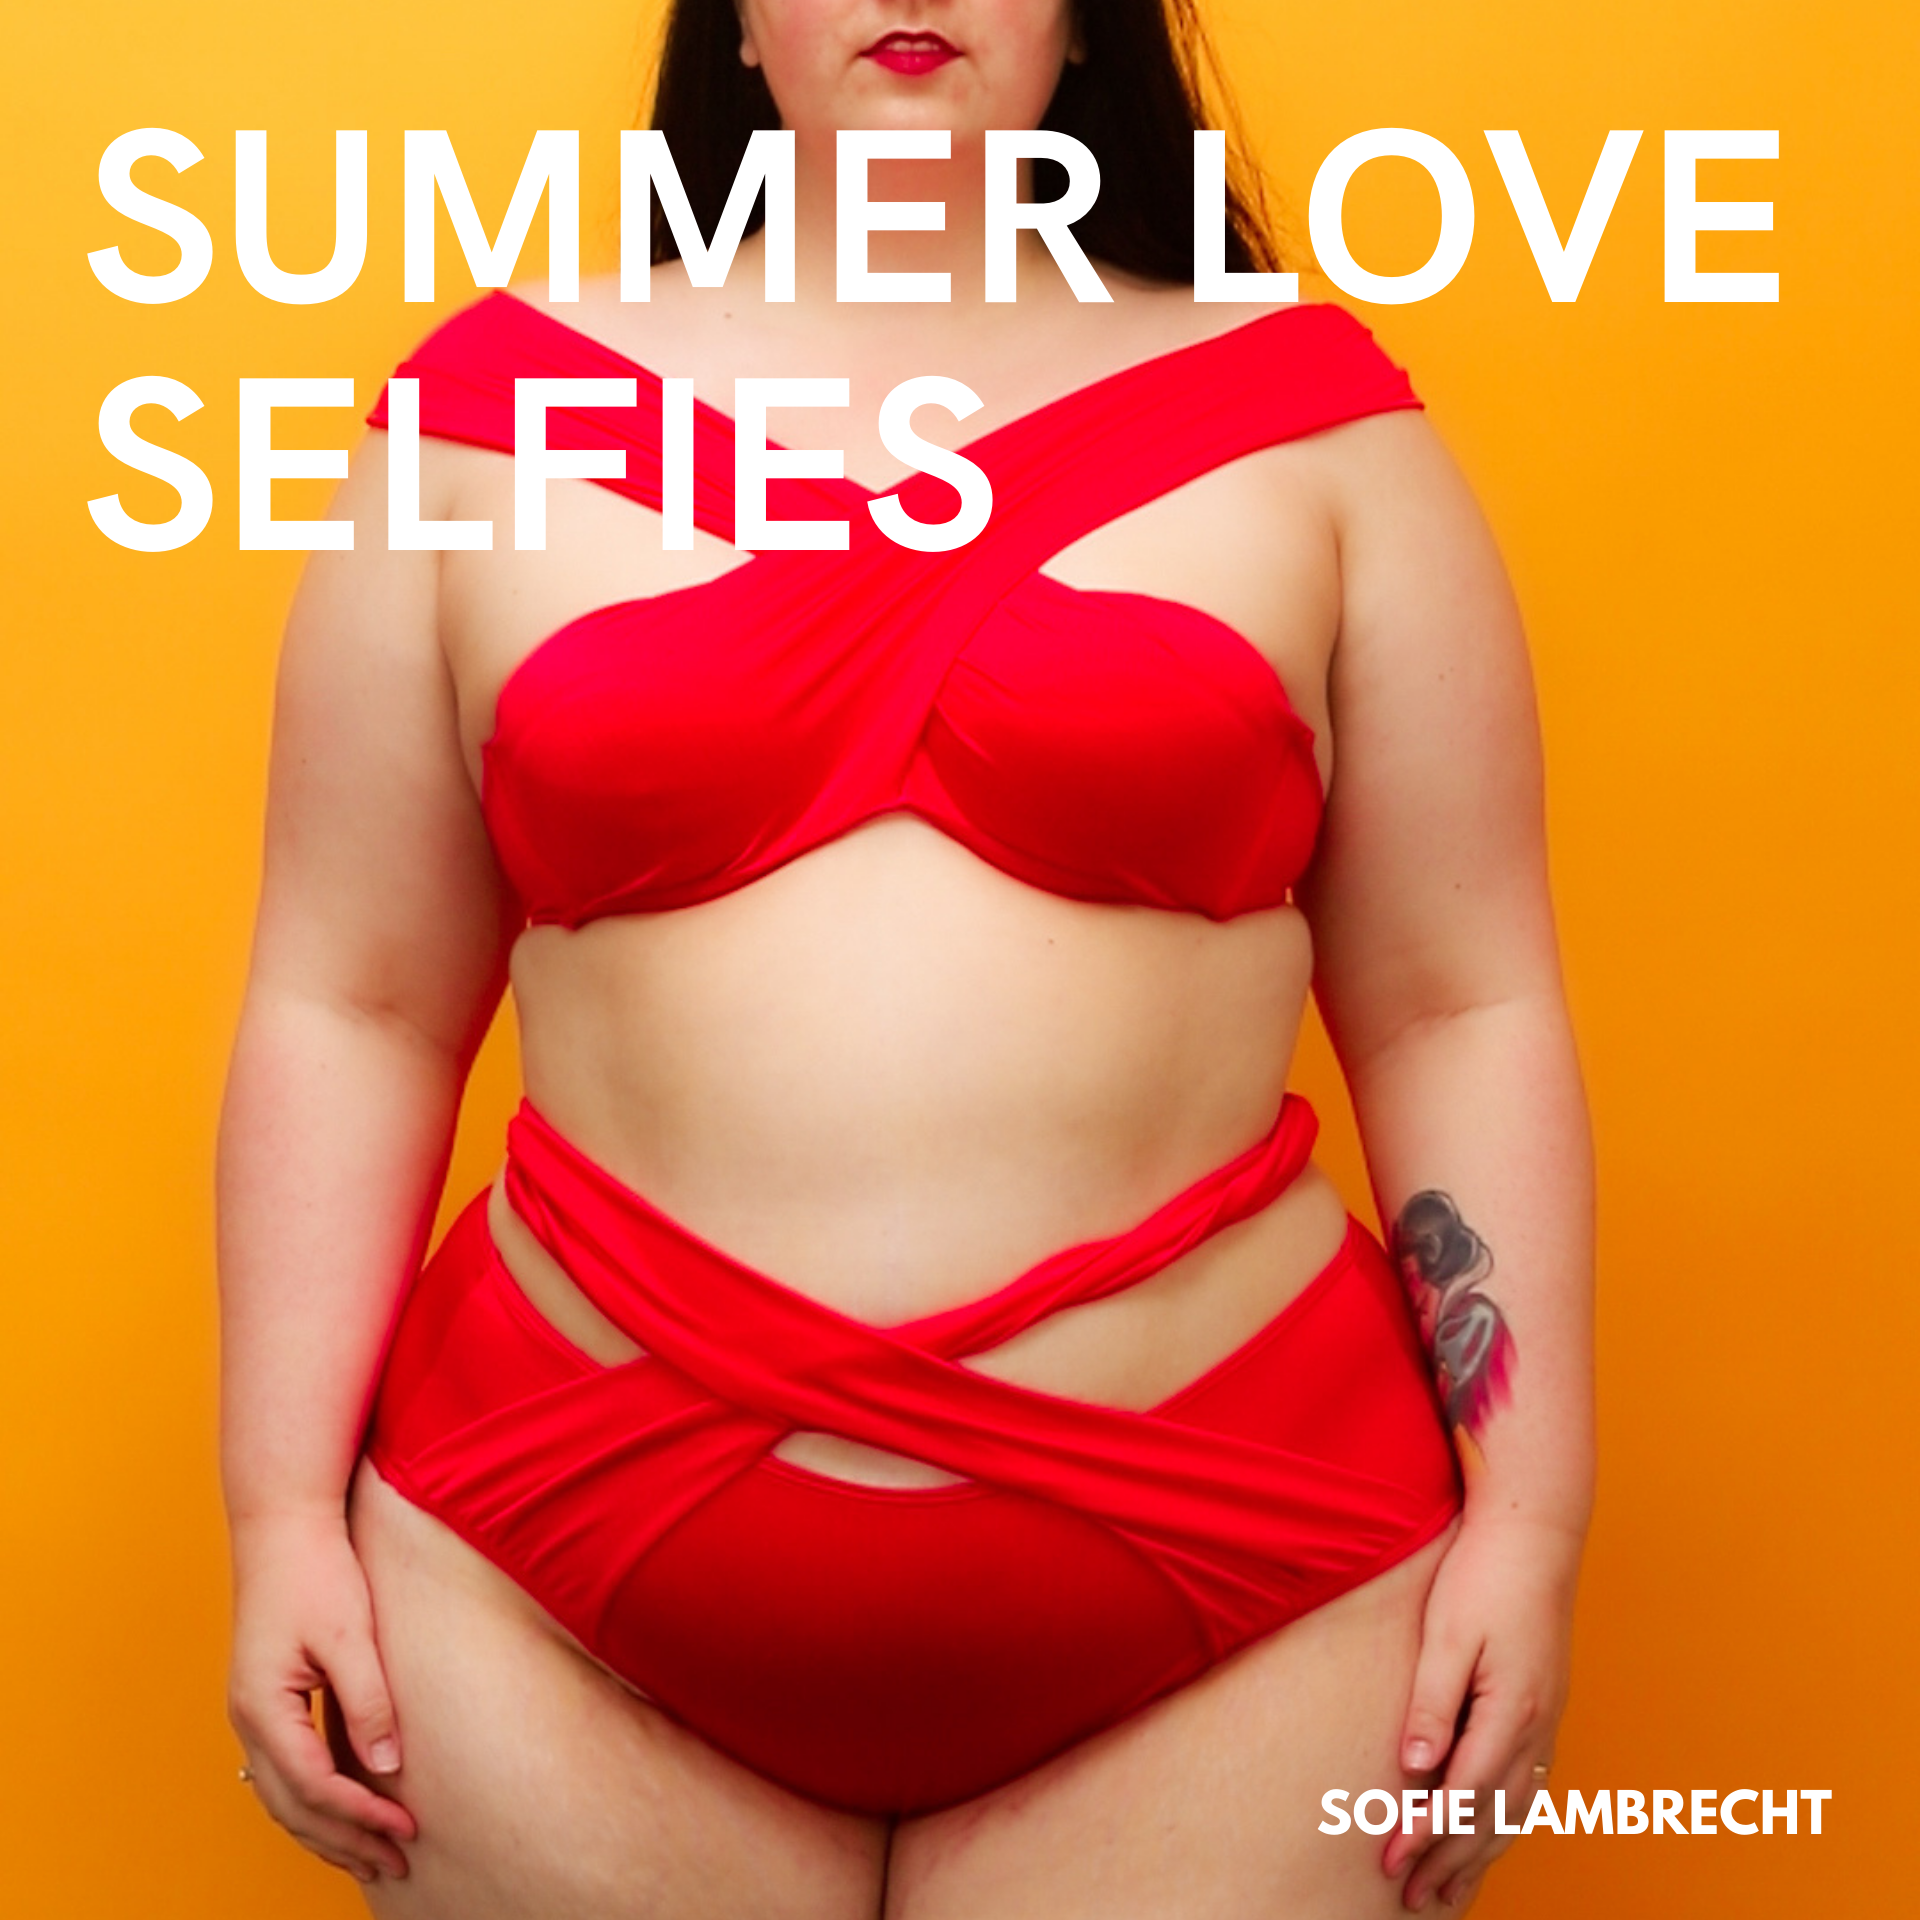 SUMMER LOVE SELFIES Sofie Lambrecht